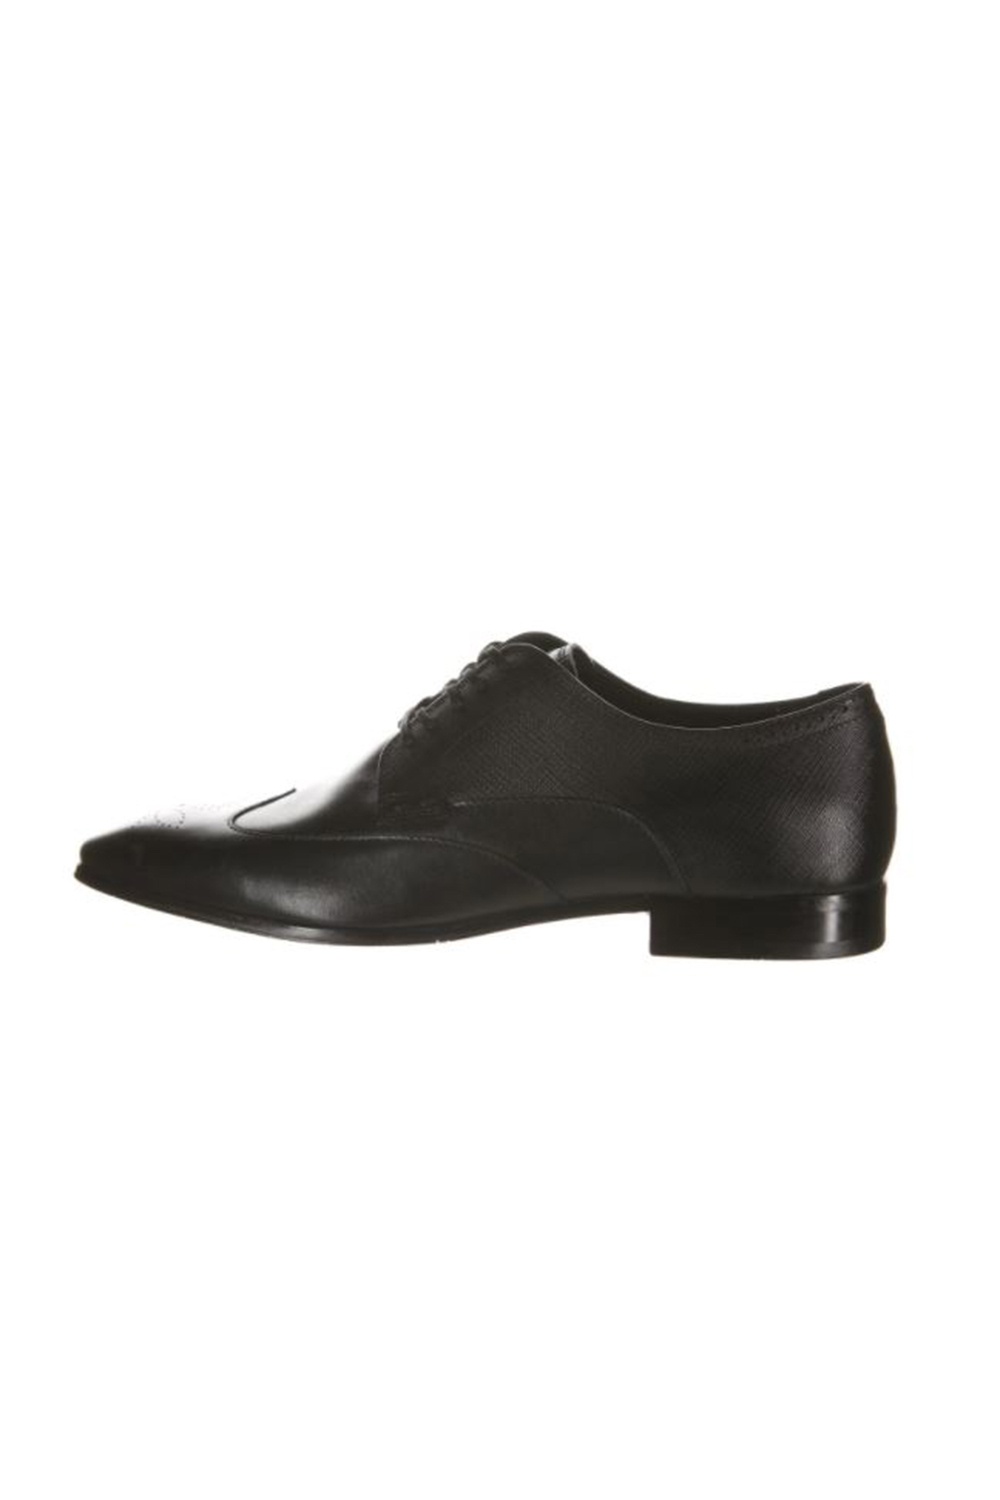 Aldo Leelen Black Men's Leather Shoes | Odel.lk